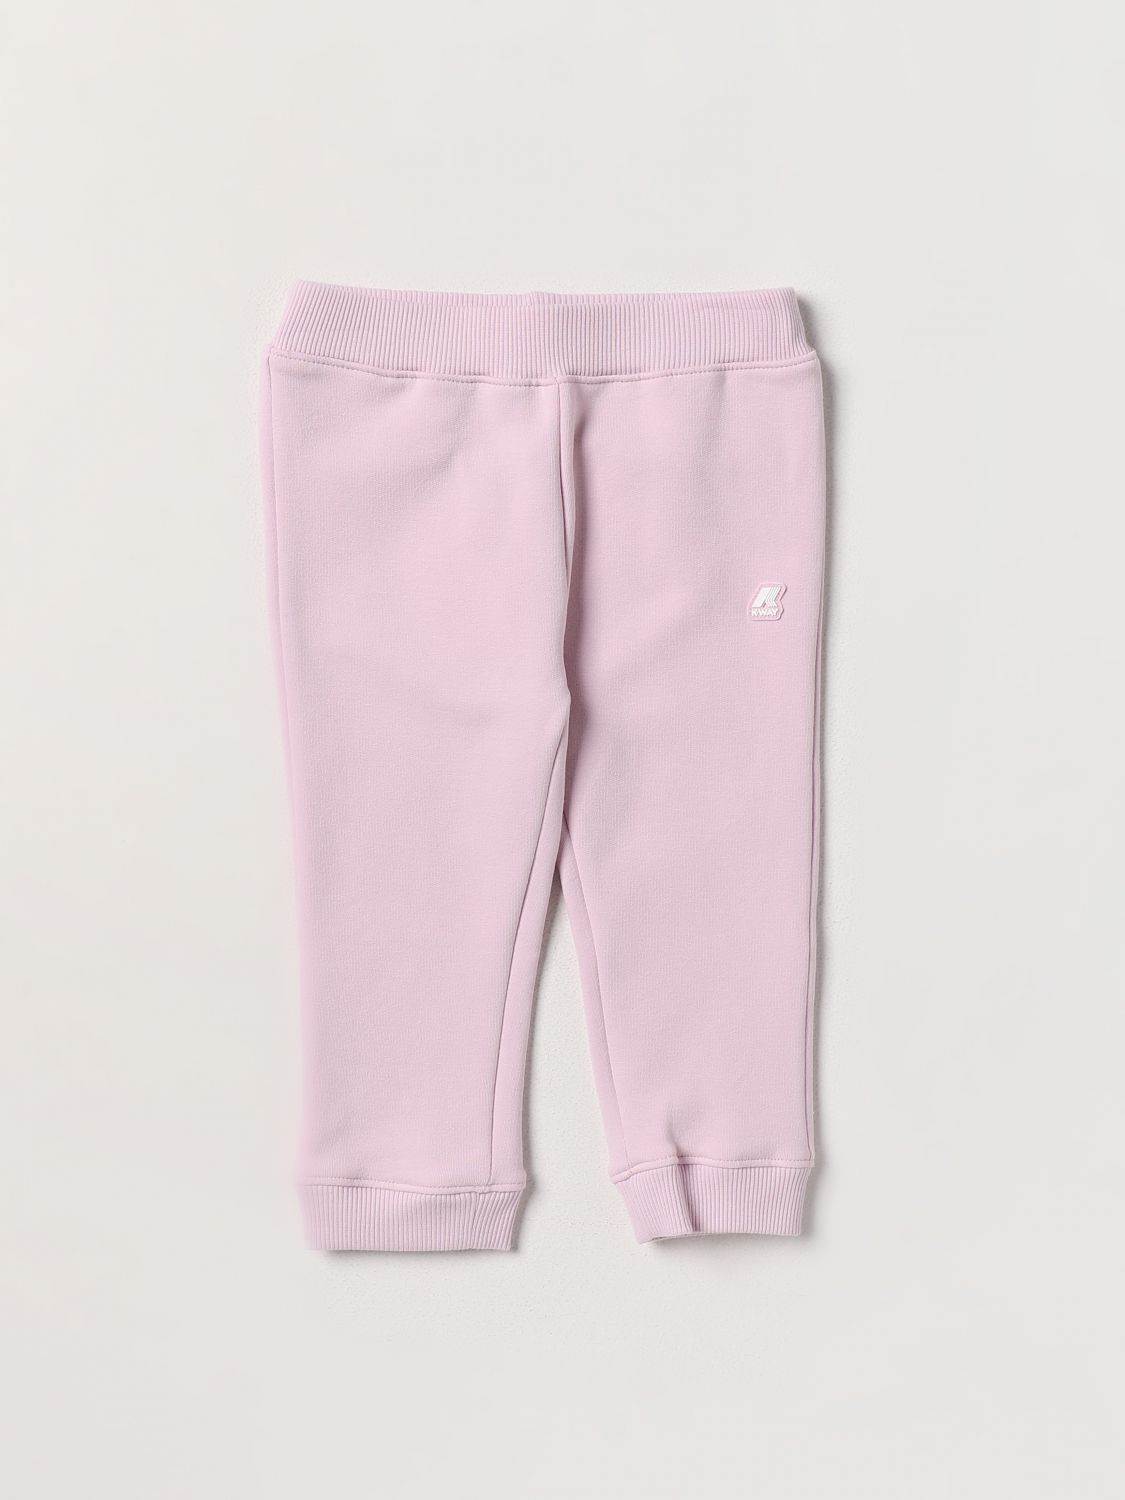 K-way Babies' Trousers  Kids In Pink